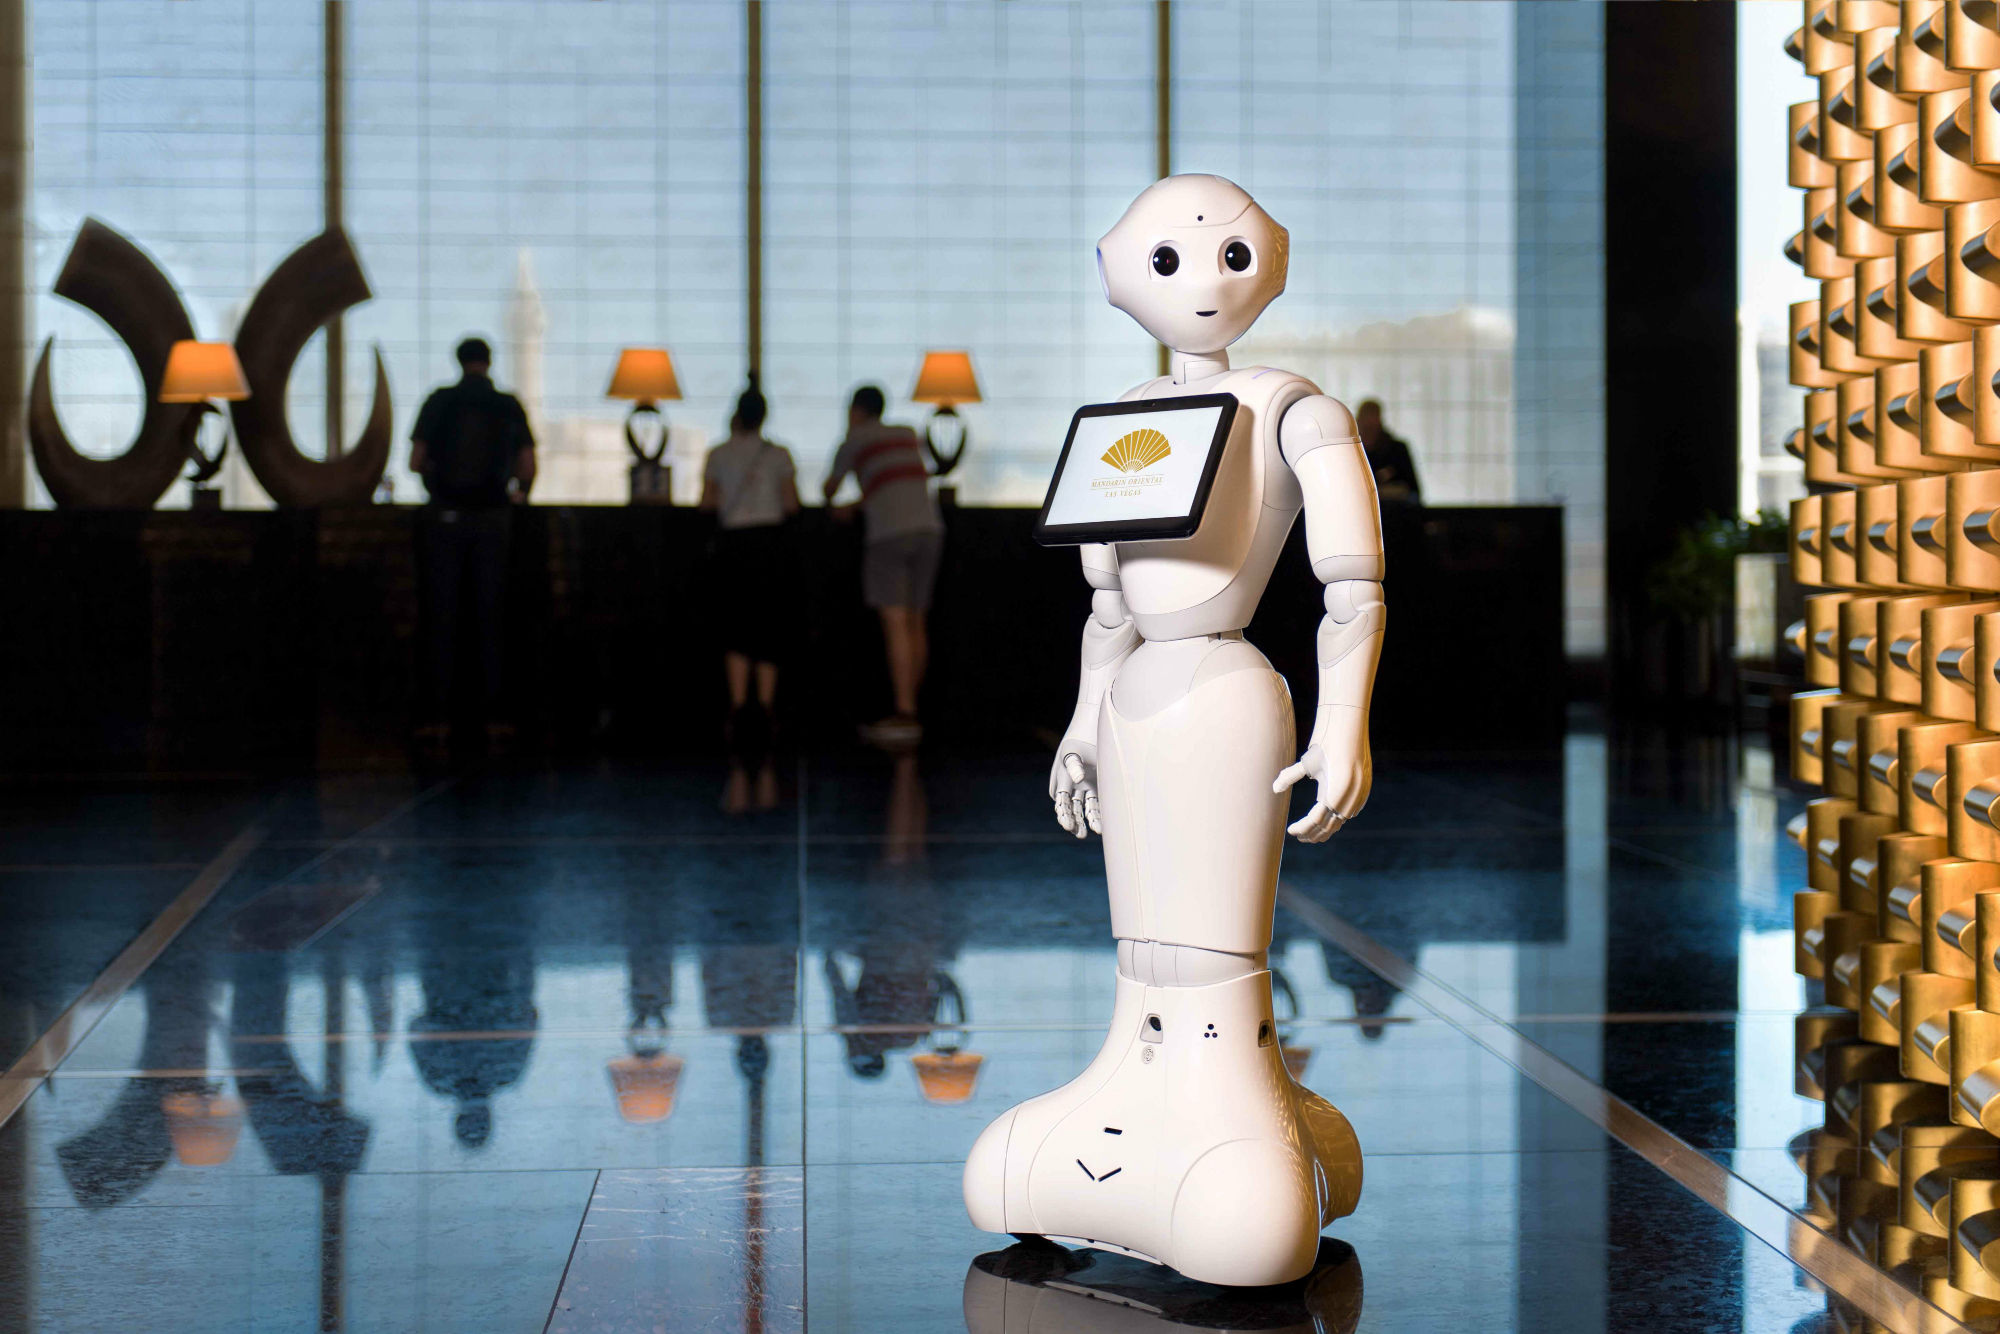 Mandarin Oriental Las Vegas hires its first humanoid robot to entertain guests